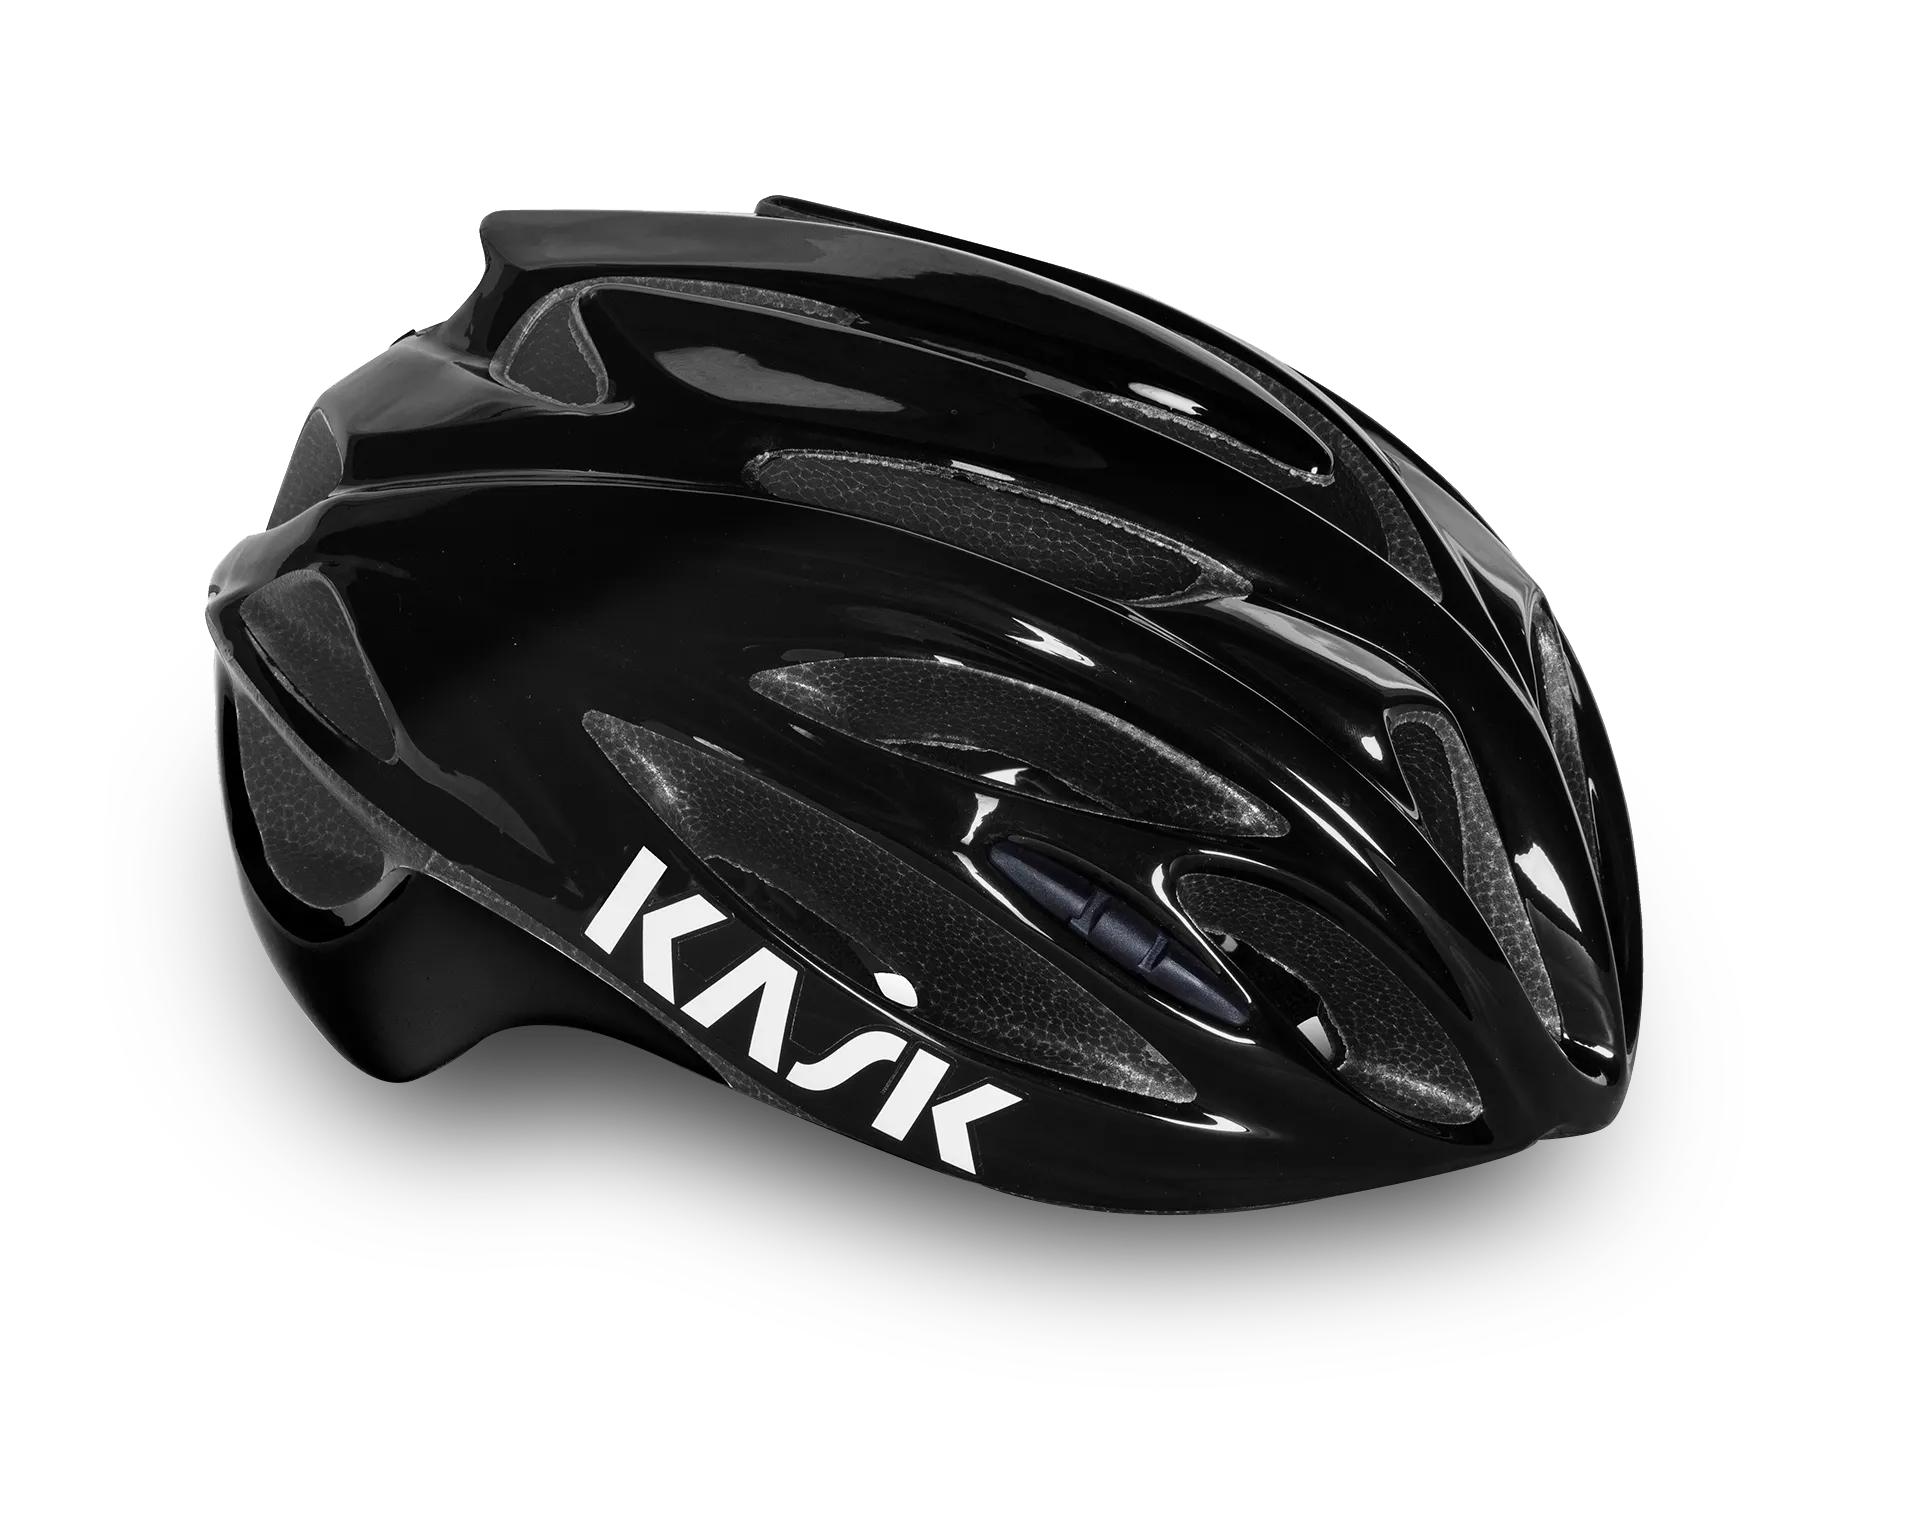 KASK Rapido Road Cycling Helmet